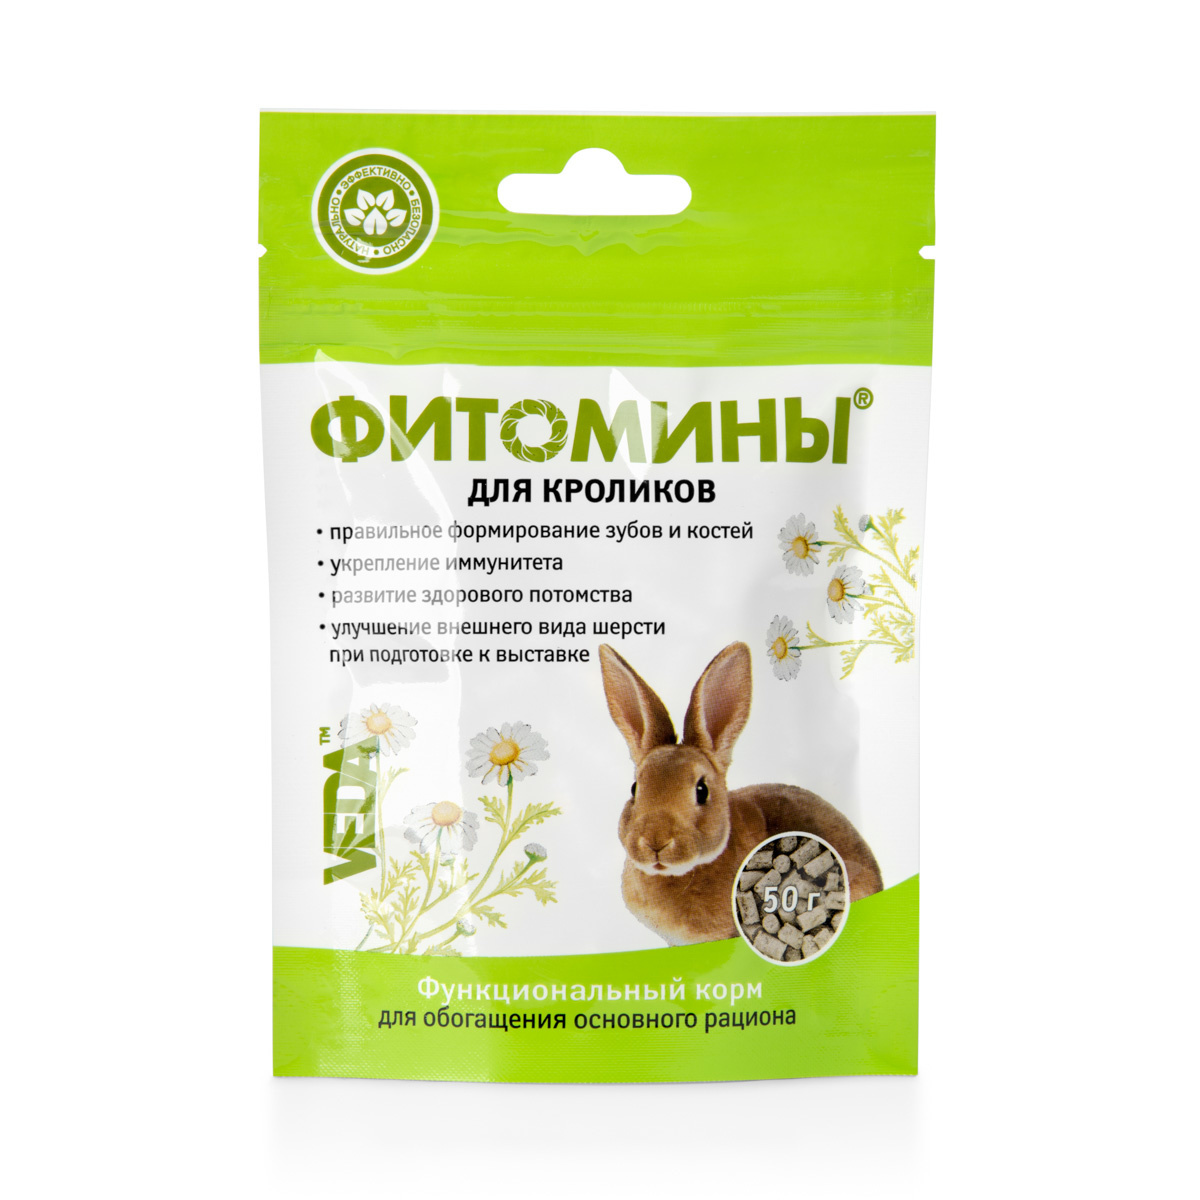 Веда Веда фитомины для кроликов (50 г) веда фитомины от аллергий собака 100таб 0 05 кг 12526